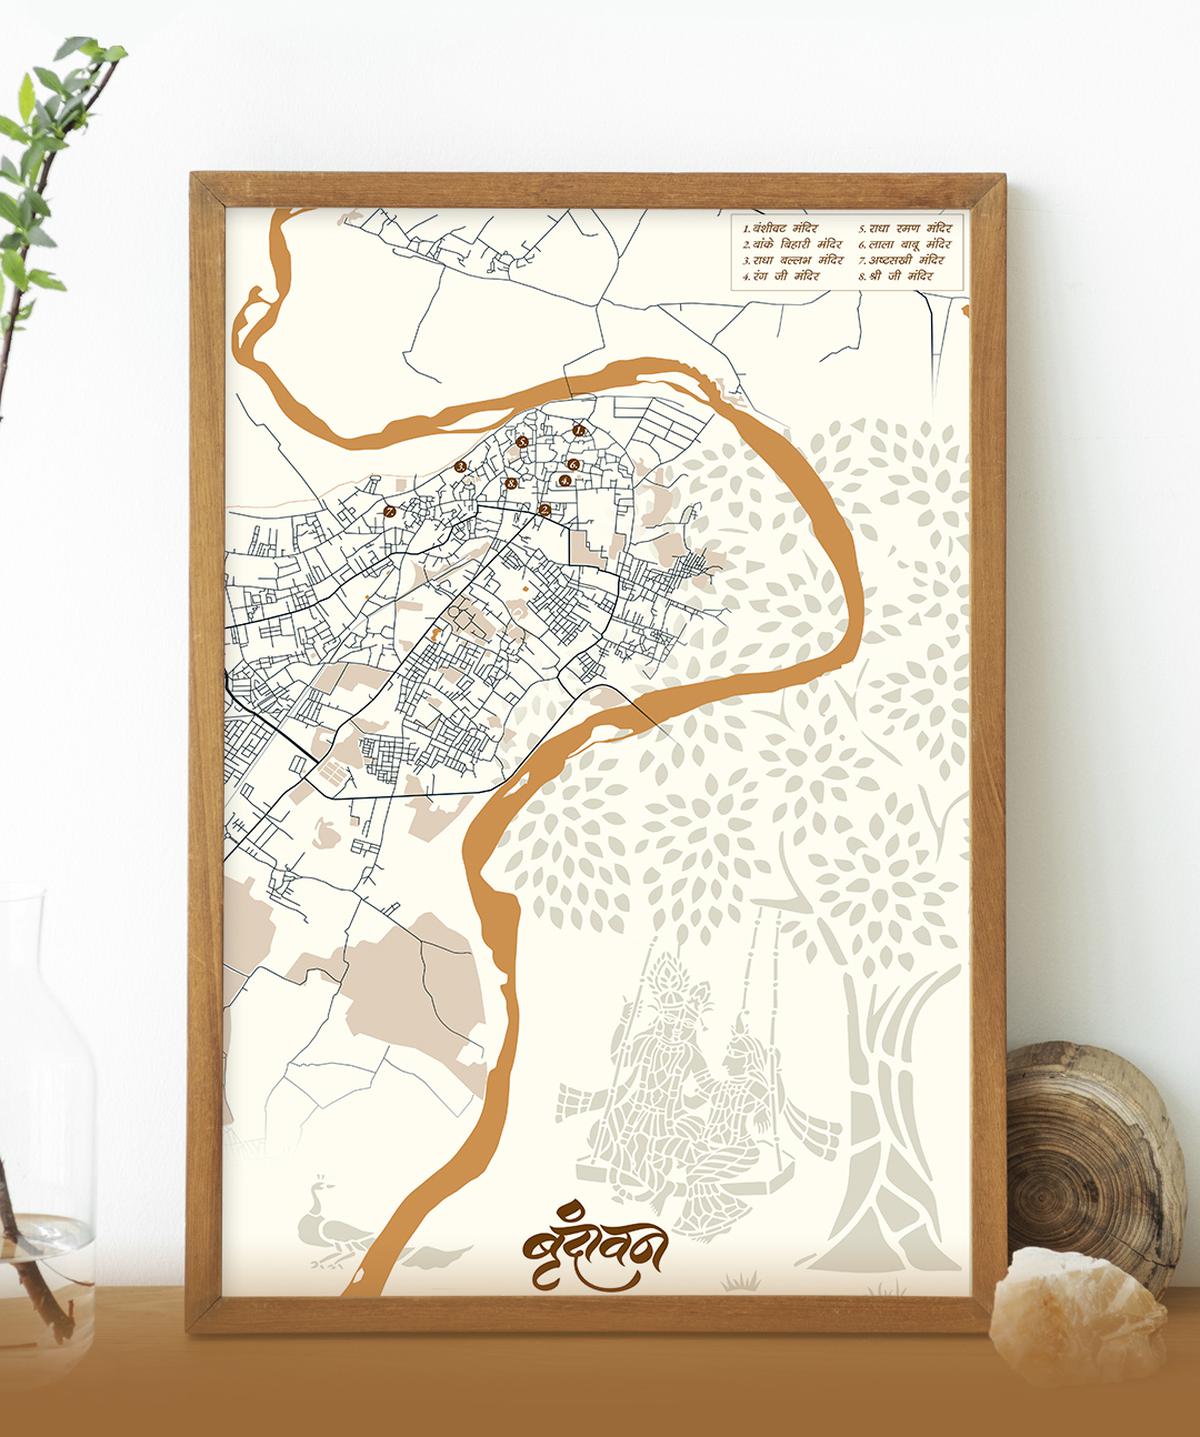 Venna’s custom-made map of Vrindavan